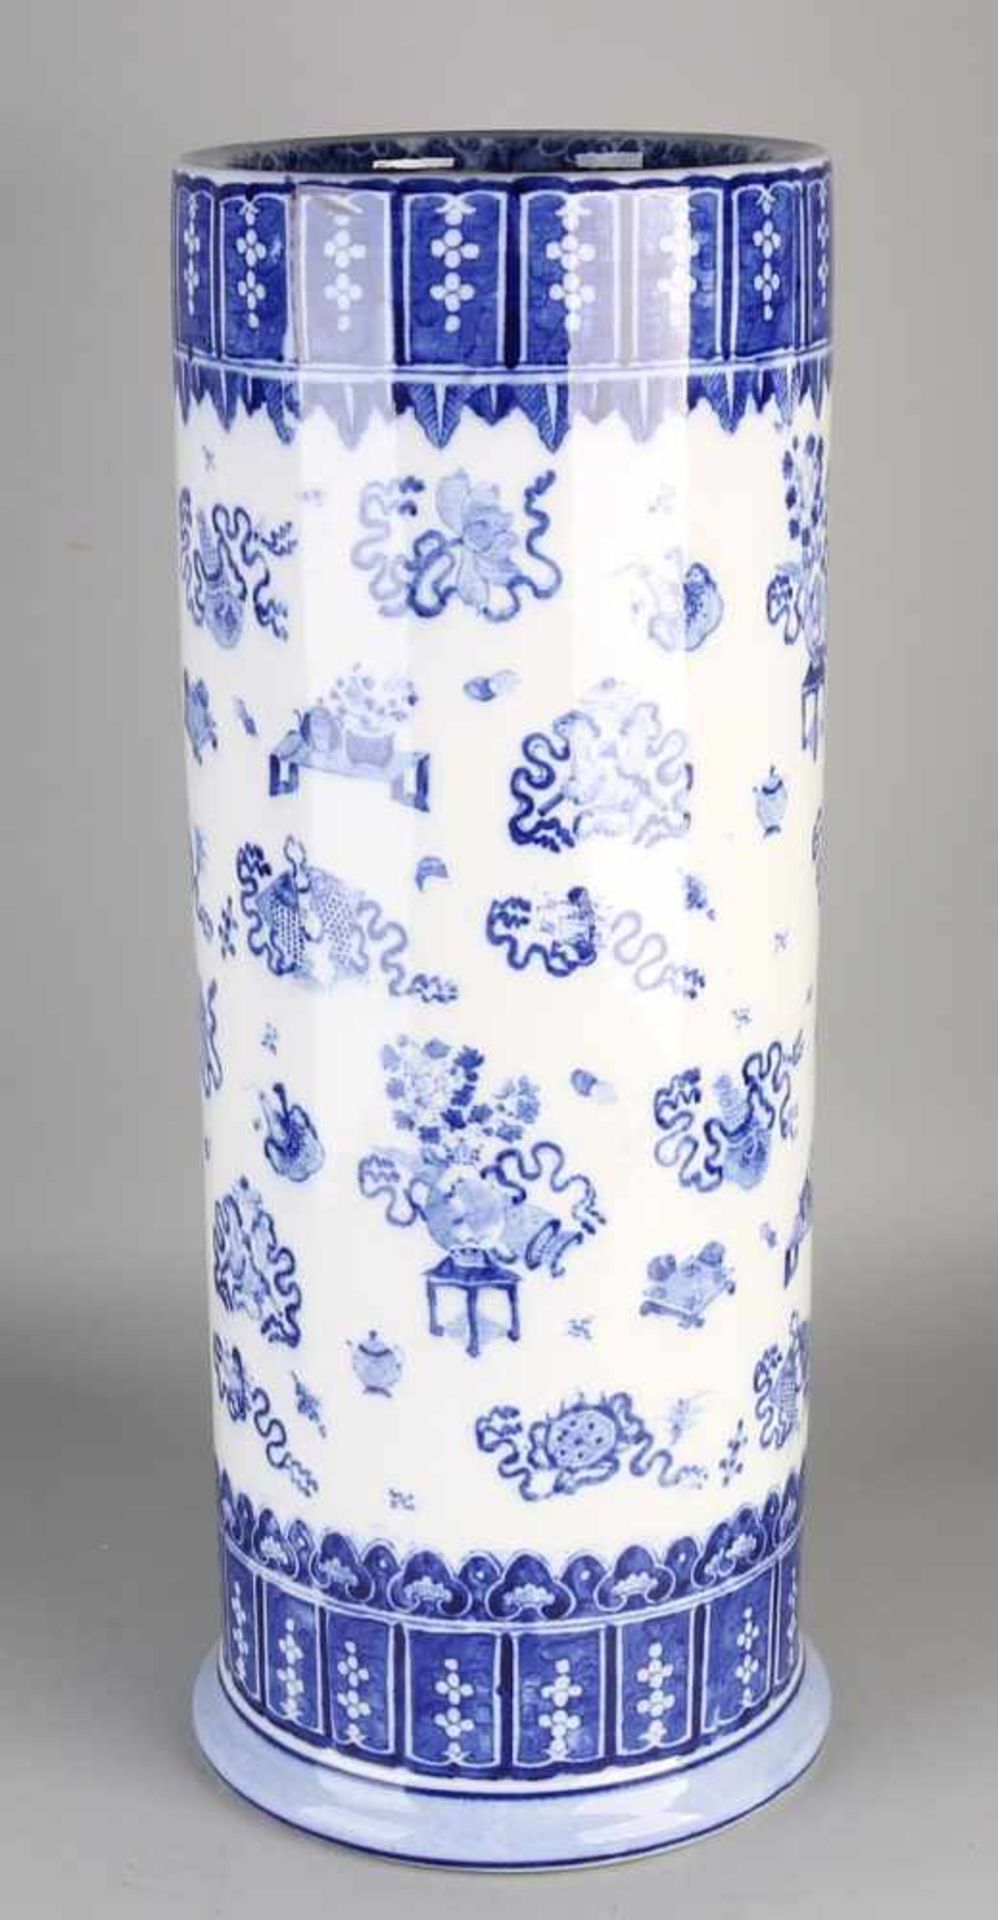 Big Petrus Regout ceramic umbrella stand with Chinese decor. Circa 1900. Dimensions: H 58 x Ø 23 cm.